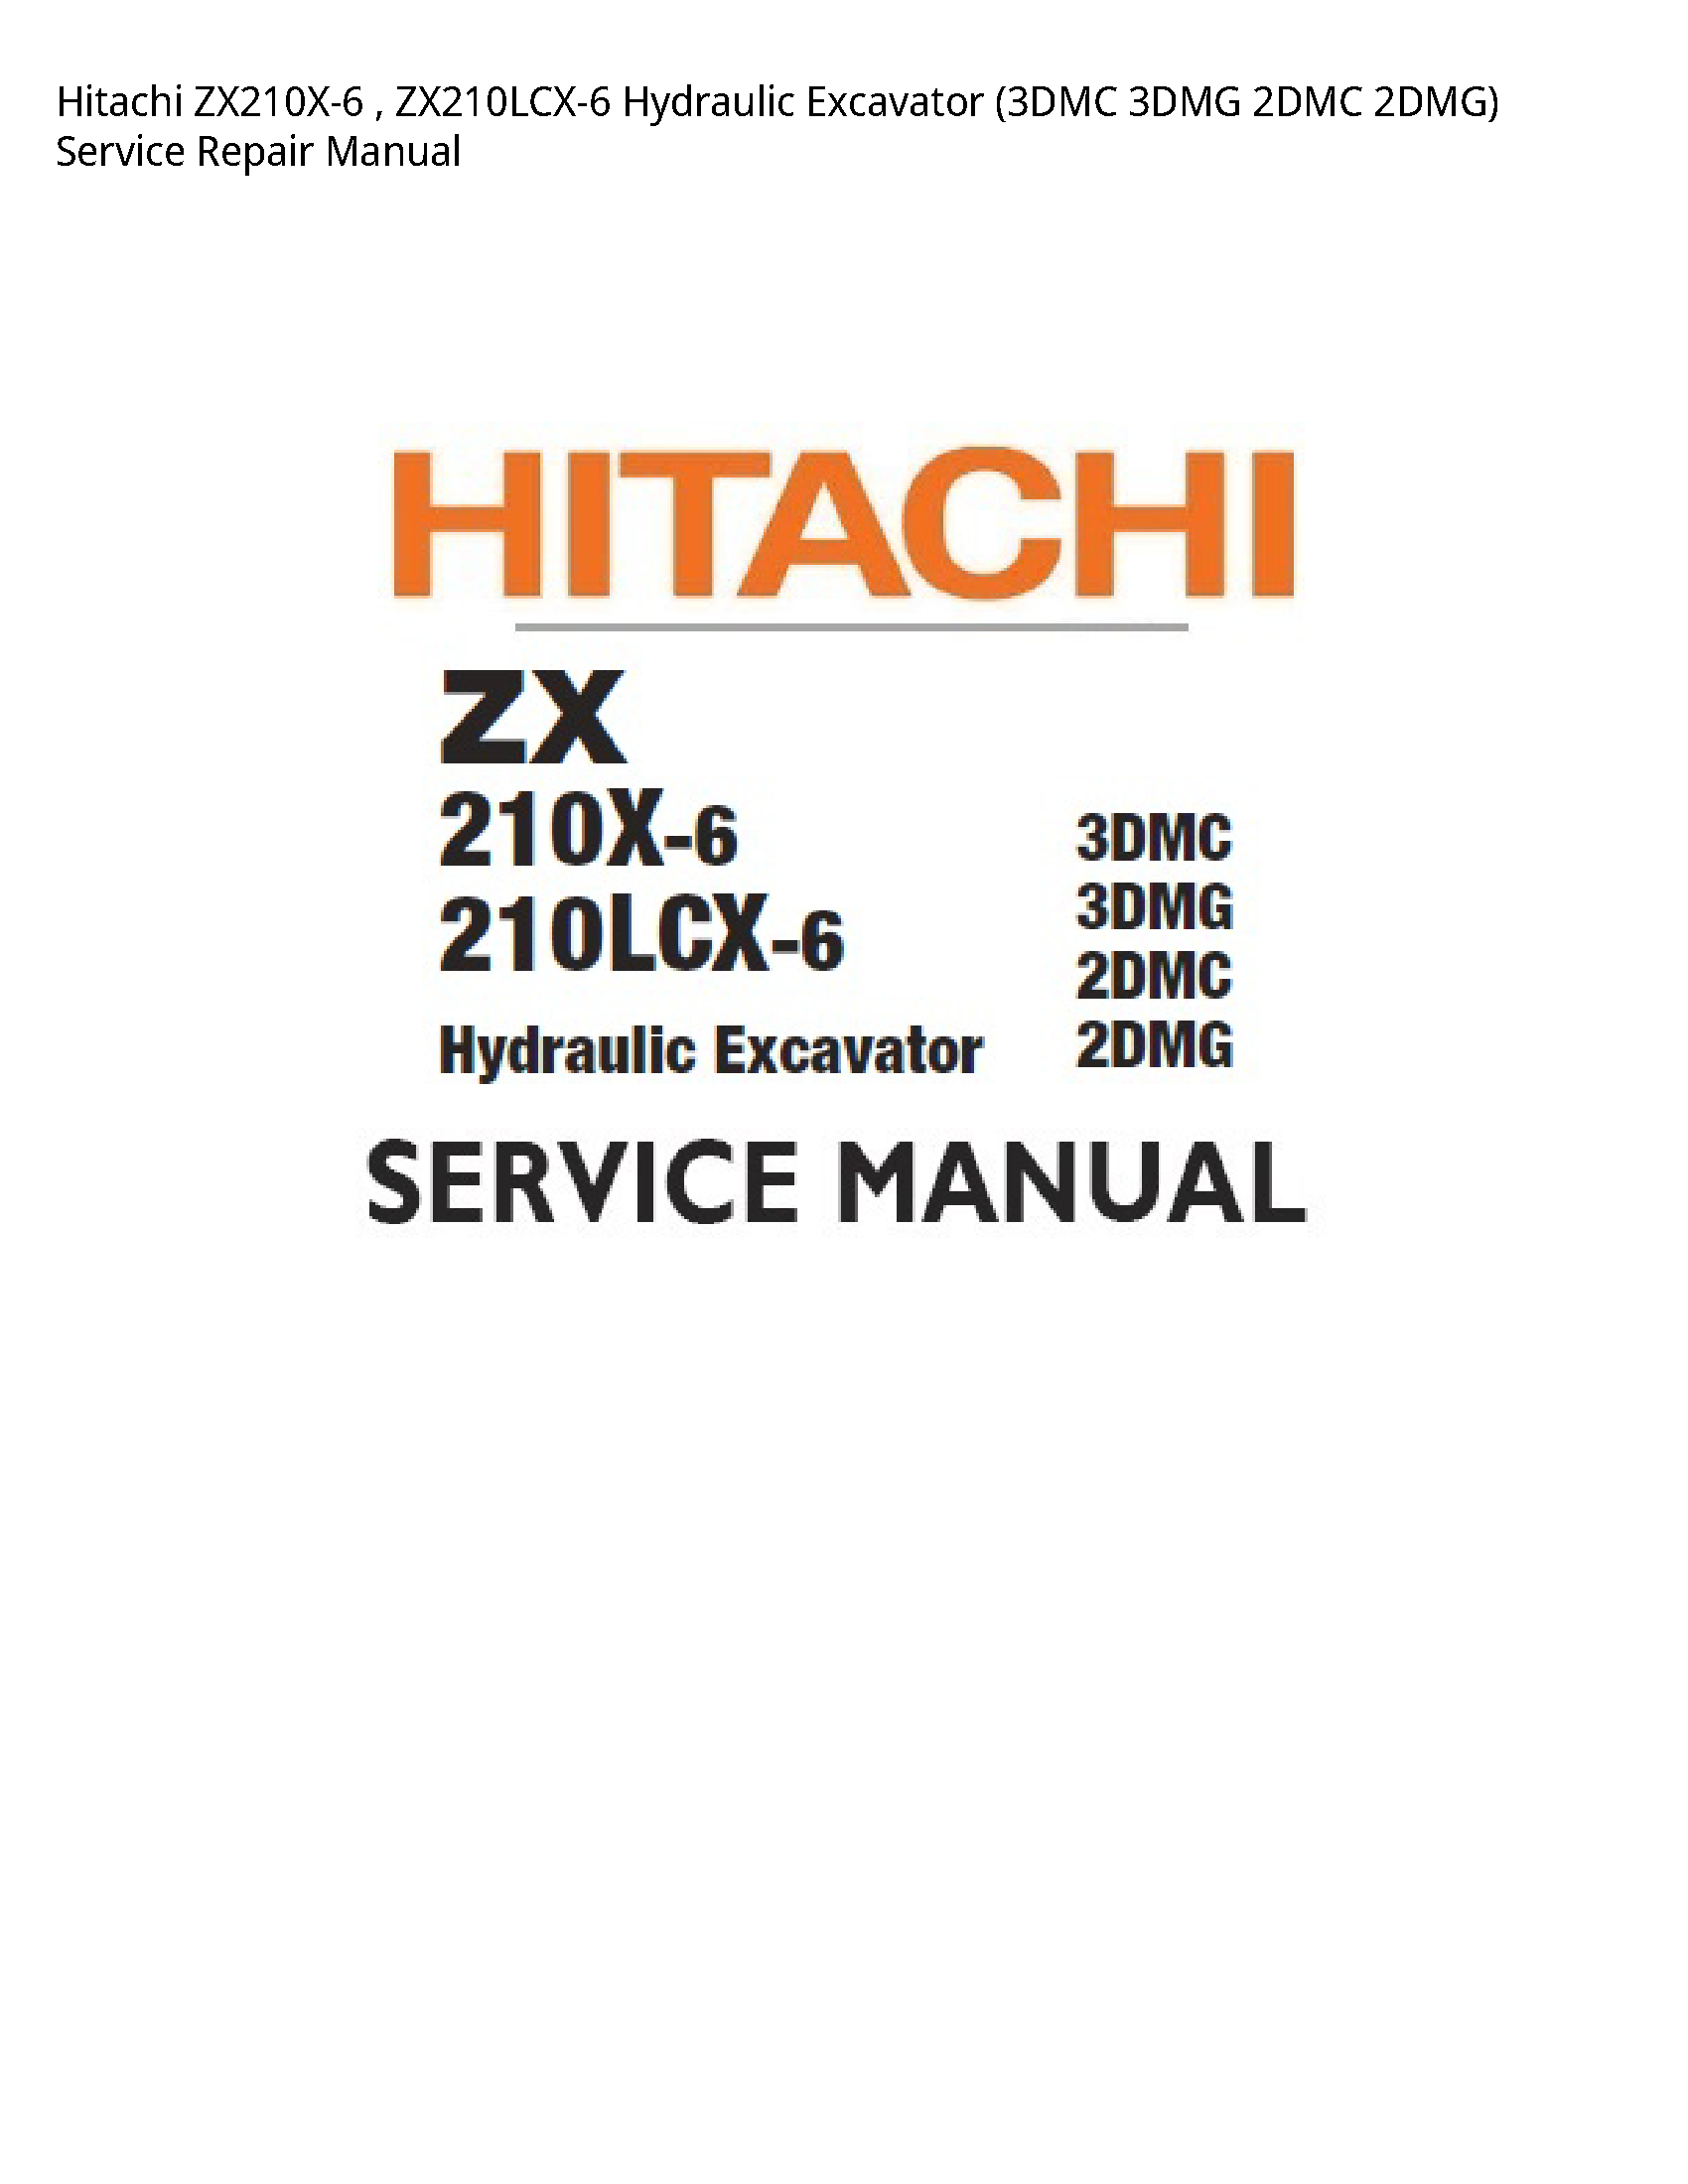 Hitachi ZX210X-6 Hydraulic Excavator manual